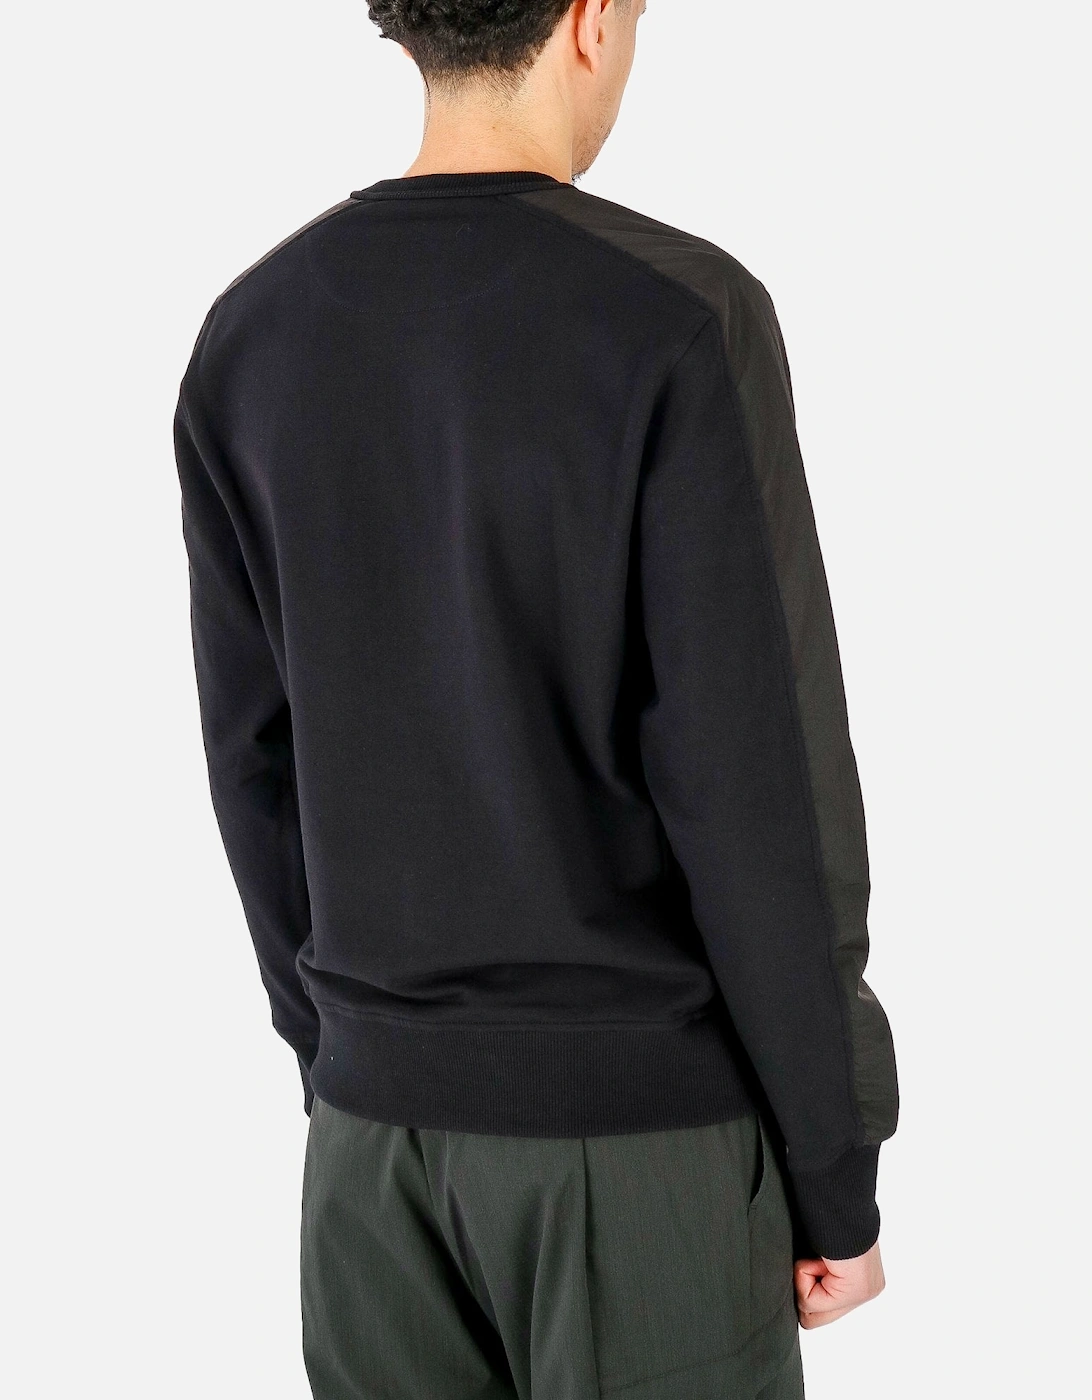 Transit Nylon Trim Black Sweatshirt